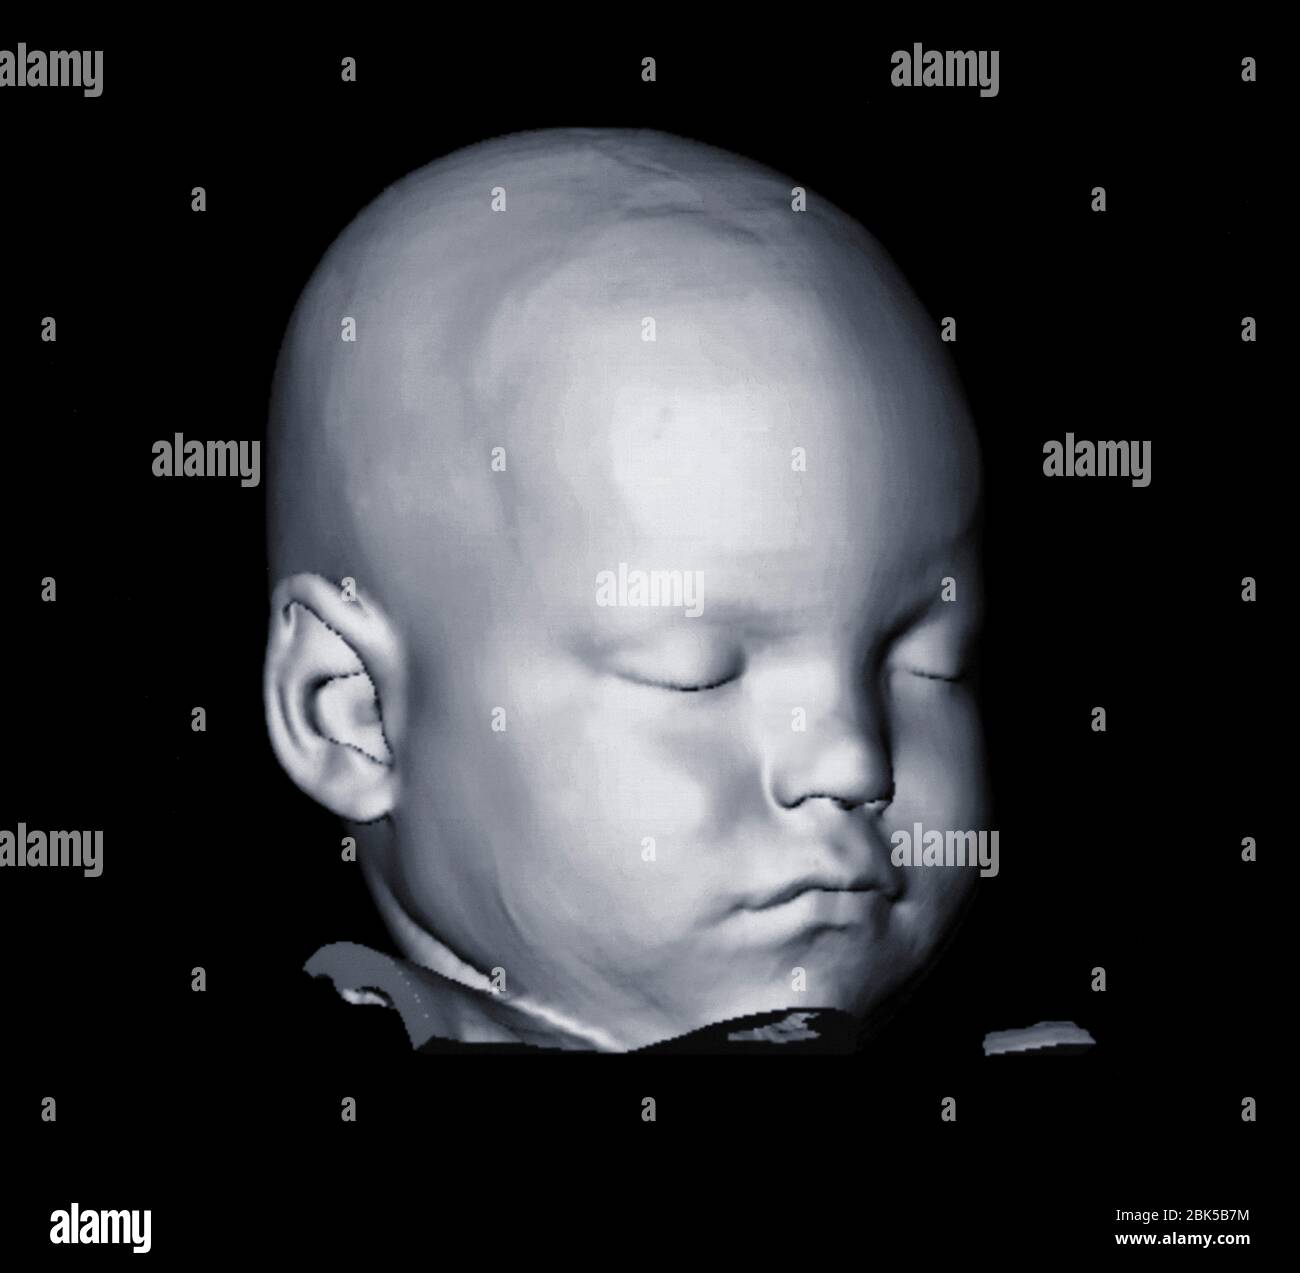 Imagen de la cabeza del bebé, tomografía computarizada (TC). Foto de stock